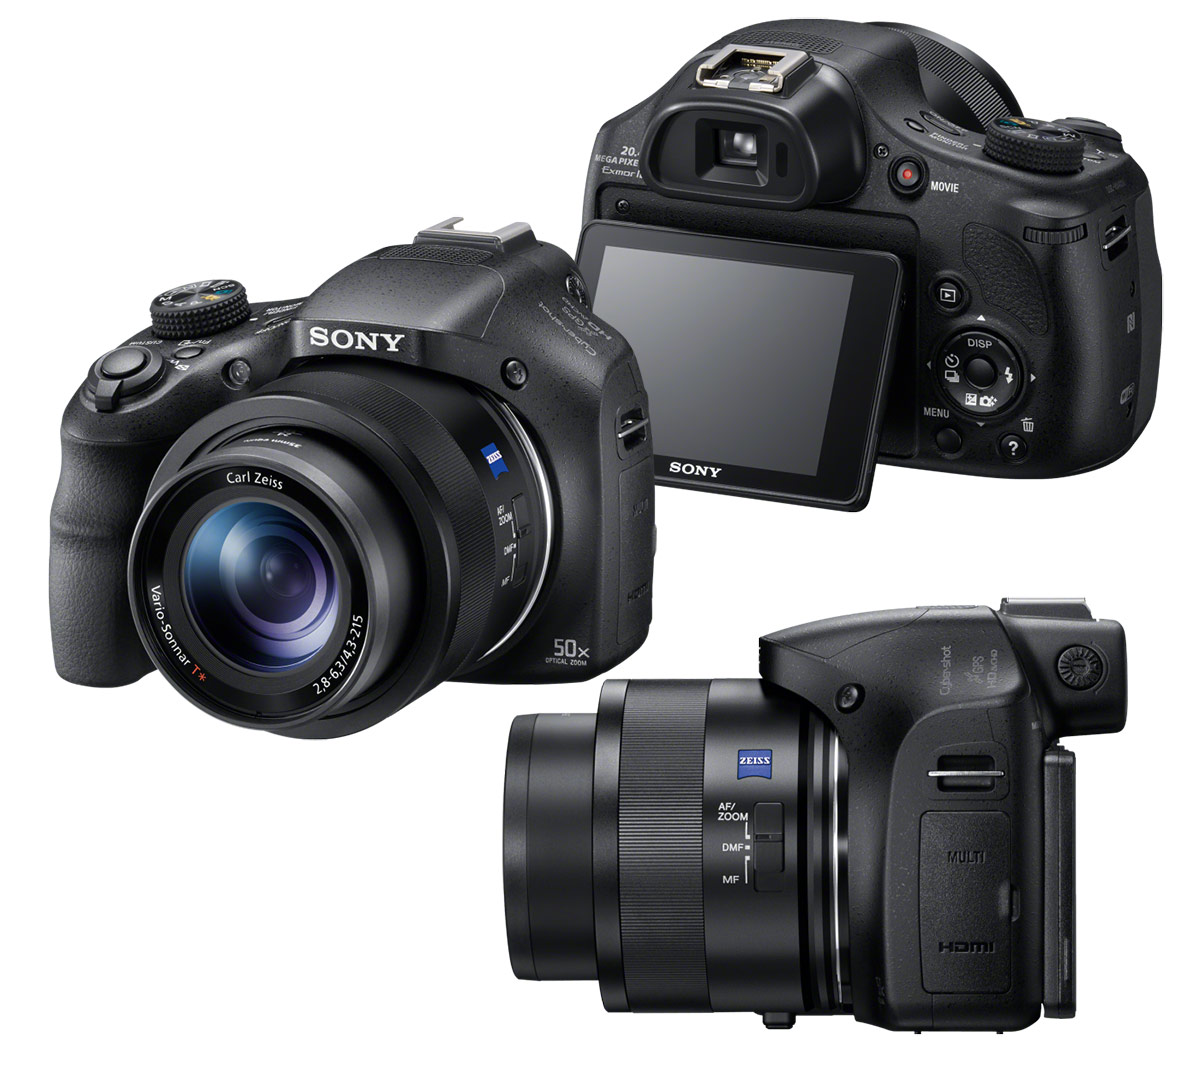 Sony Cyber-shot DSC-HX400/B Digital Camera